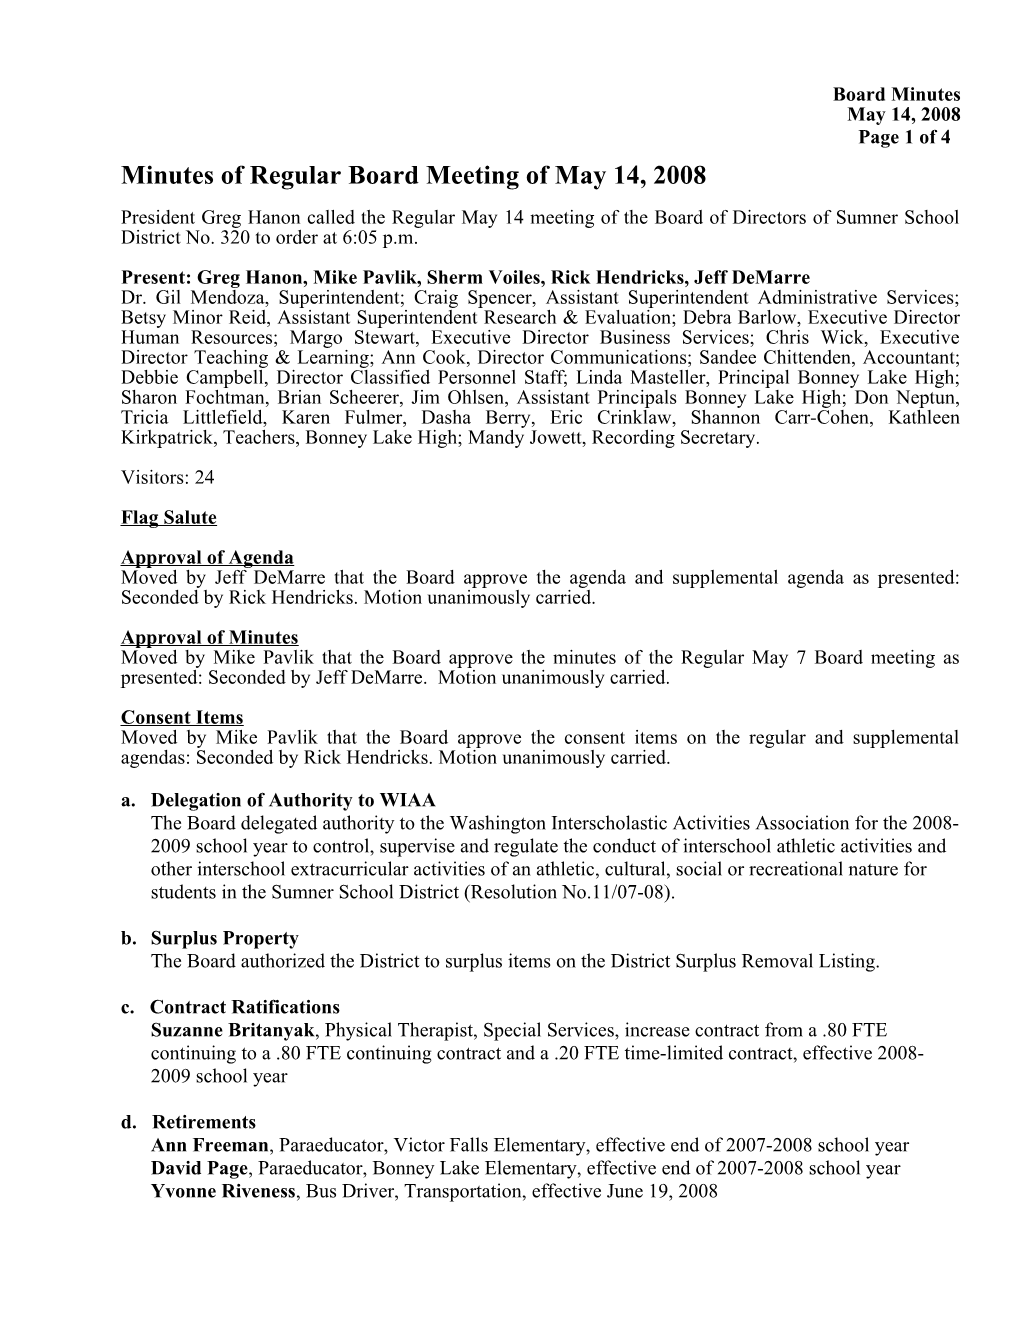 Minutes of Regular Board Meeting of May 14, 2008